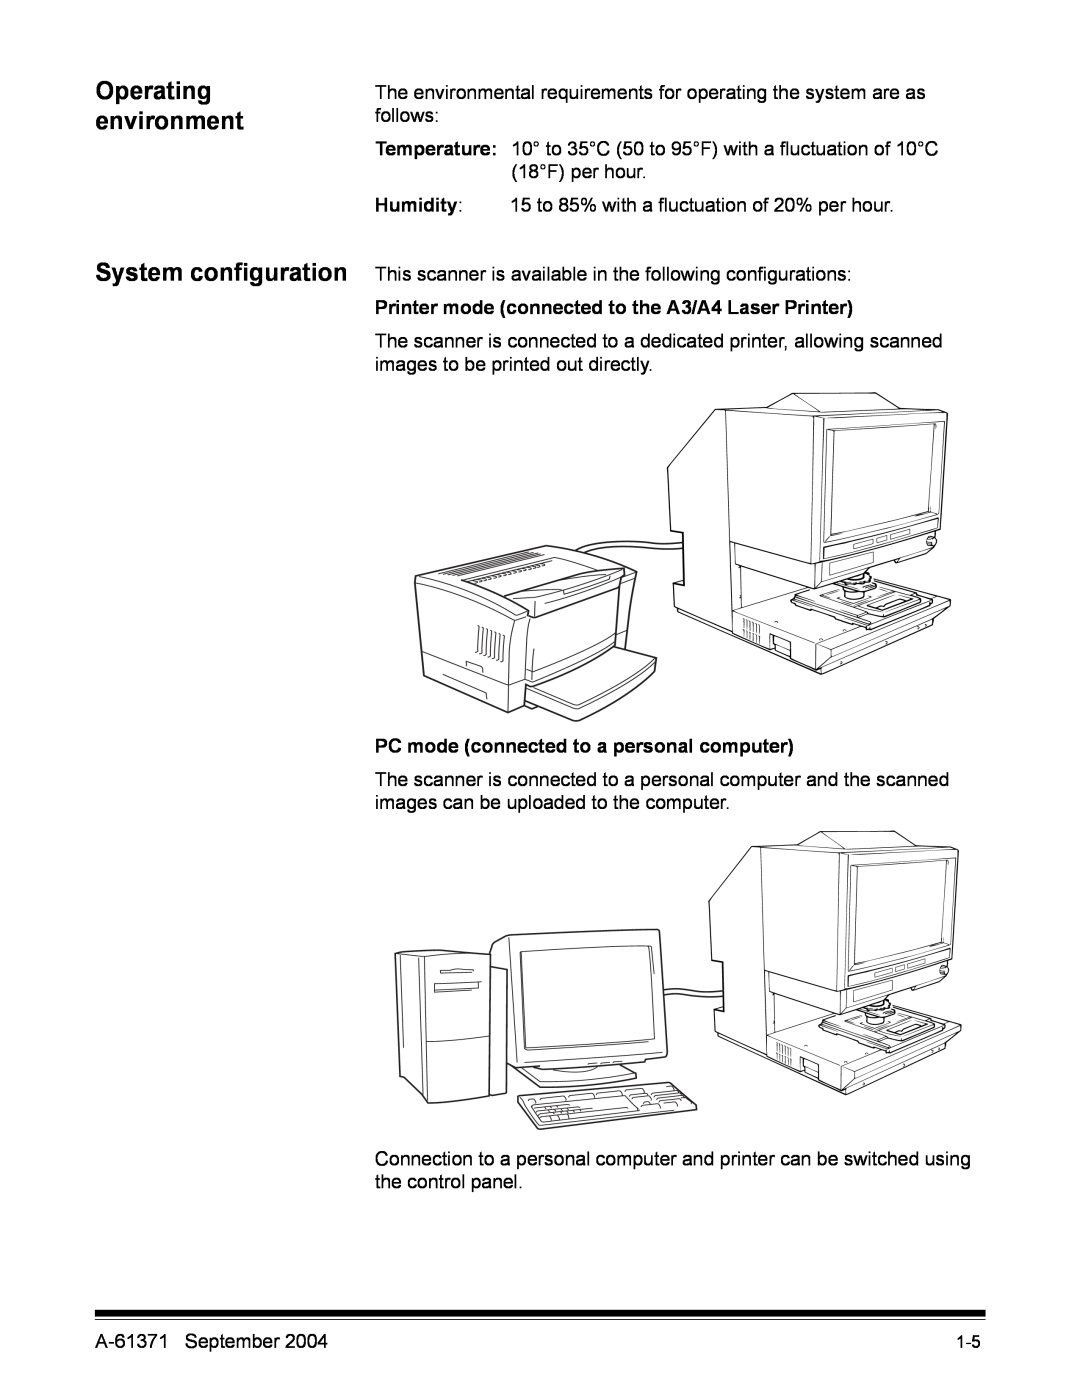 Kodak 3000DSV-E manual Operating environment, Printer mode connected to the A3/A4 Laser Printer 